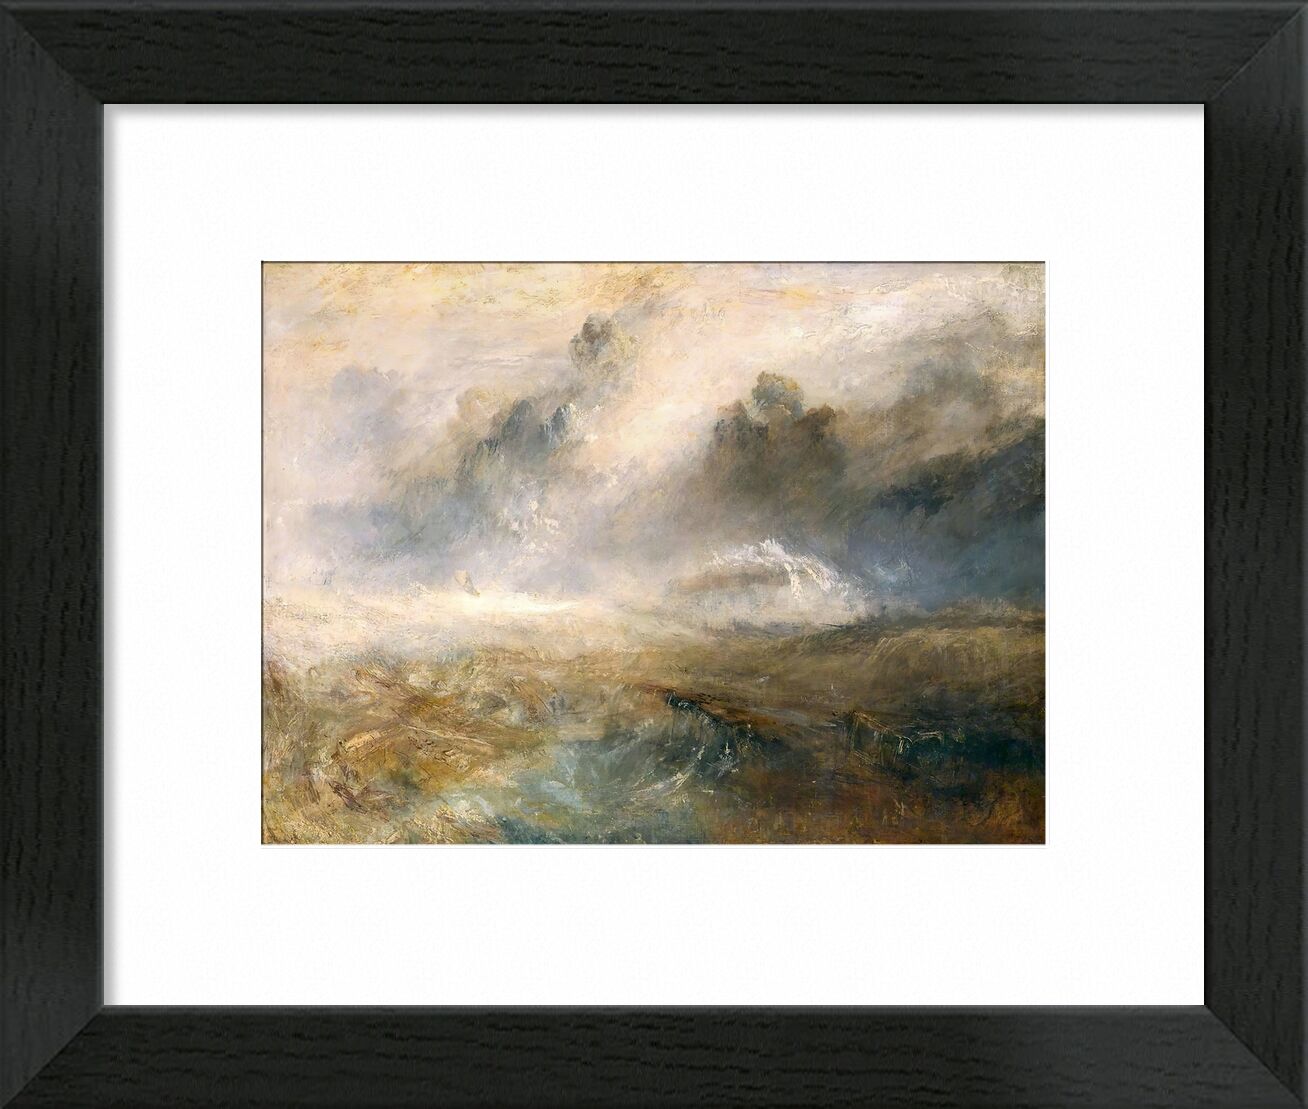 Rough Sea with Wreckage von Bildende Kunst, Prodi Art, TURNER, Malerei, Meer, Sturm, Wracks